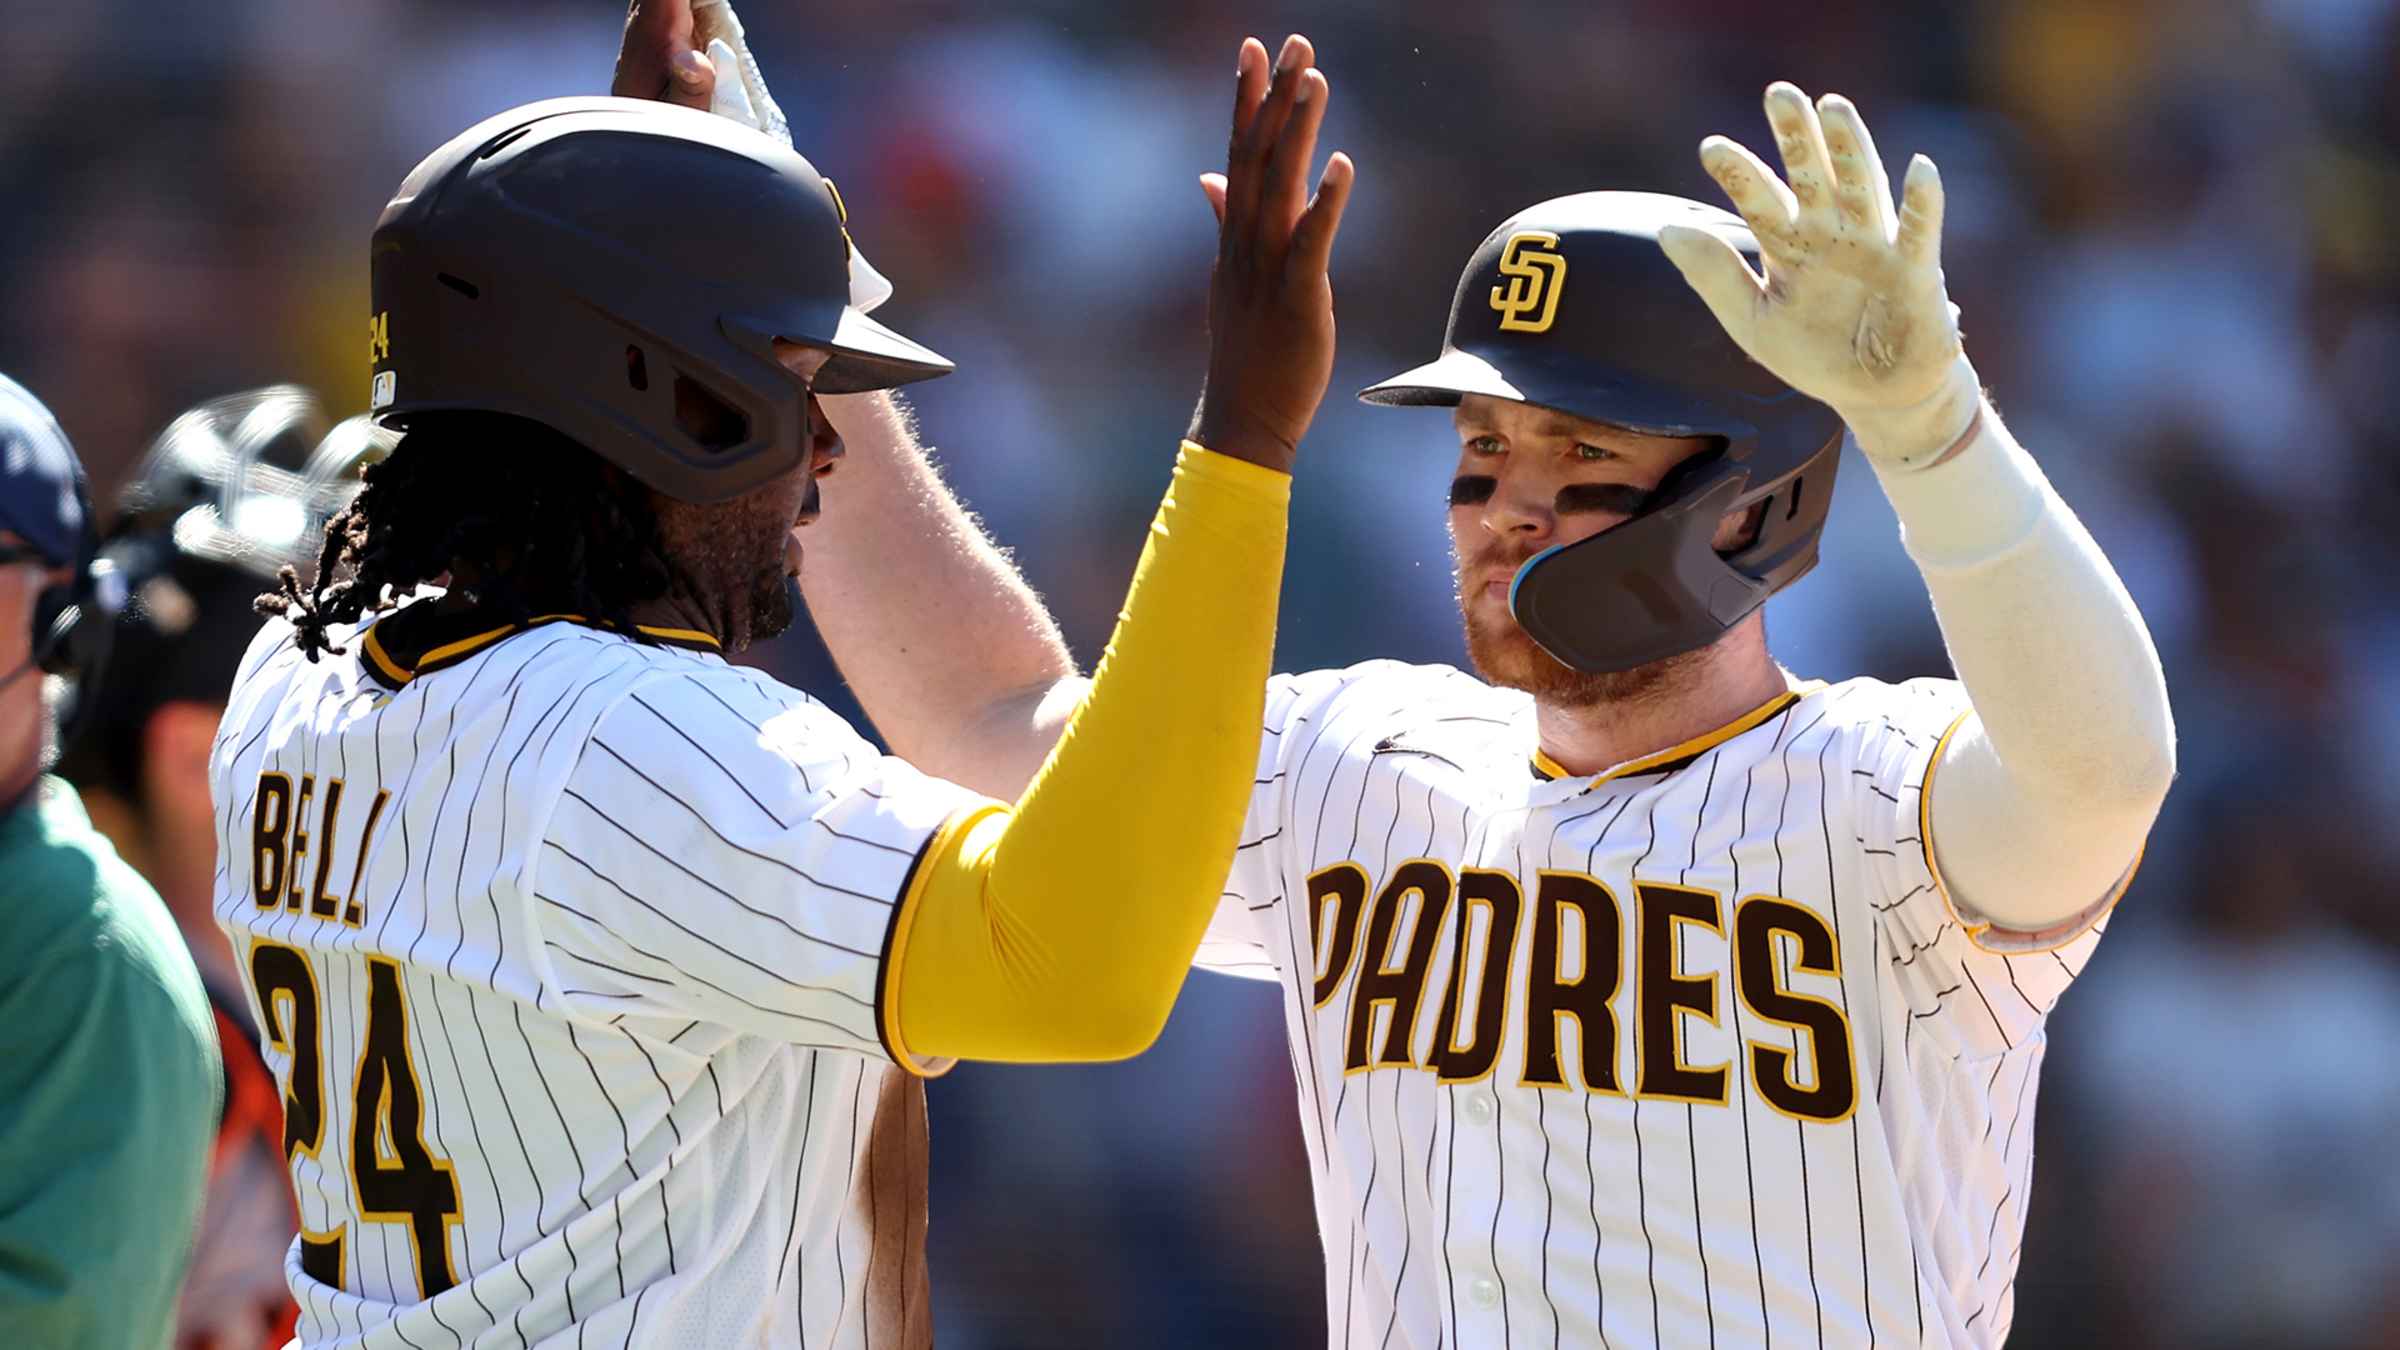 Padres 2020 uniforms : r/baseball